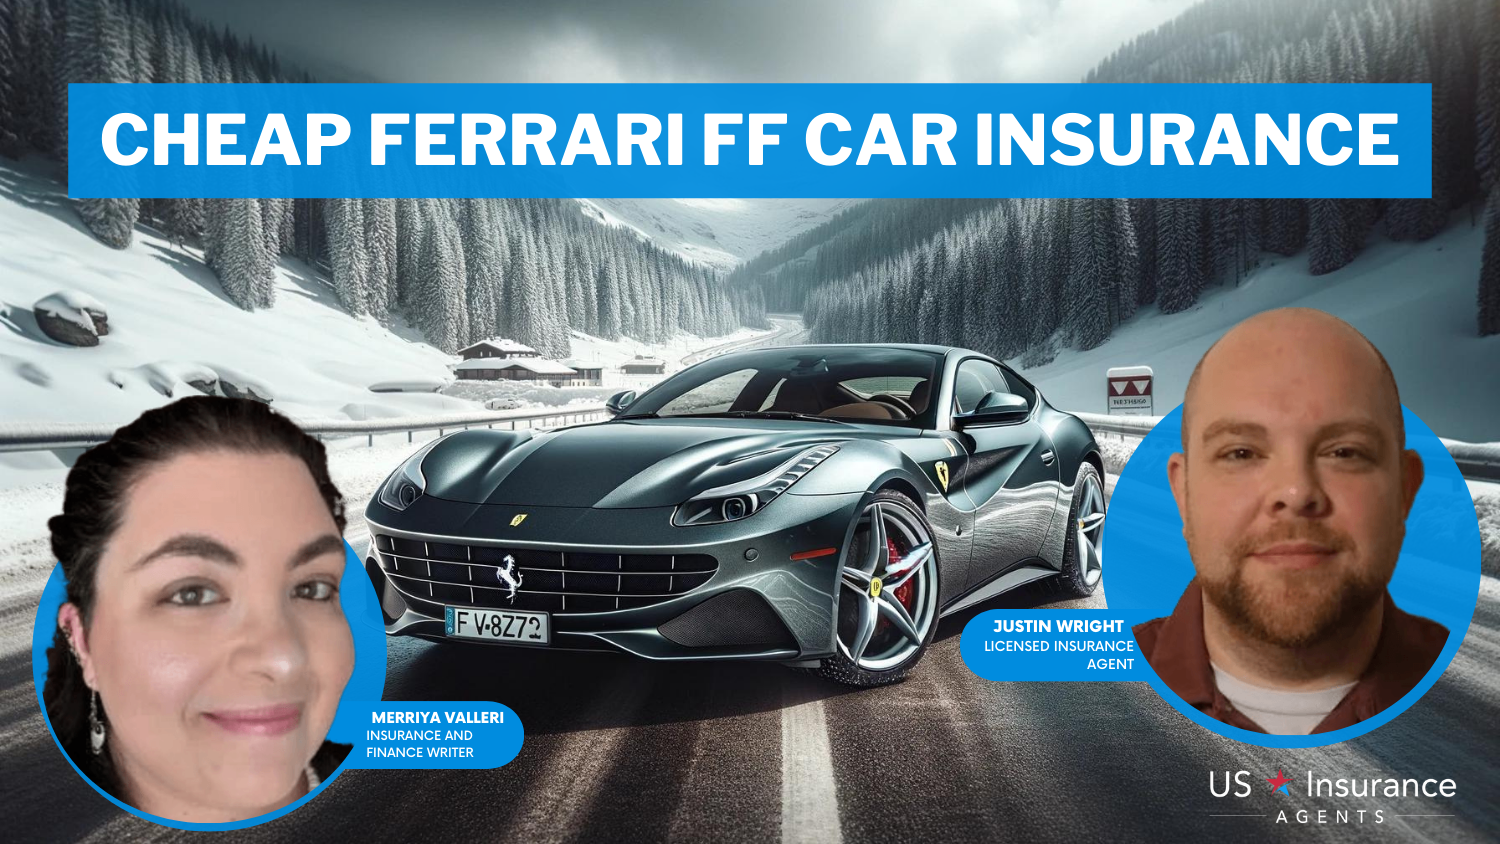 Cheap Ferrari FF Car Insurance: Erie, Auto-Owners, and AAA